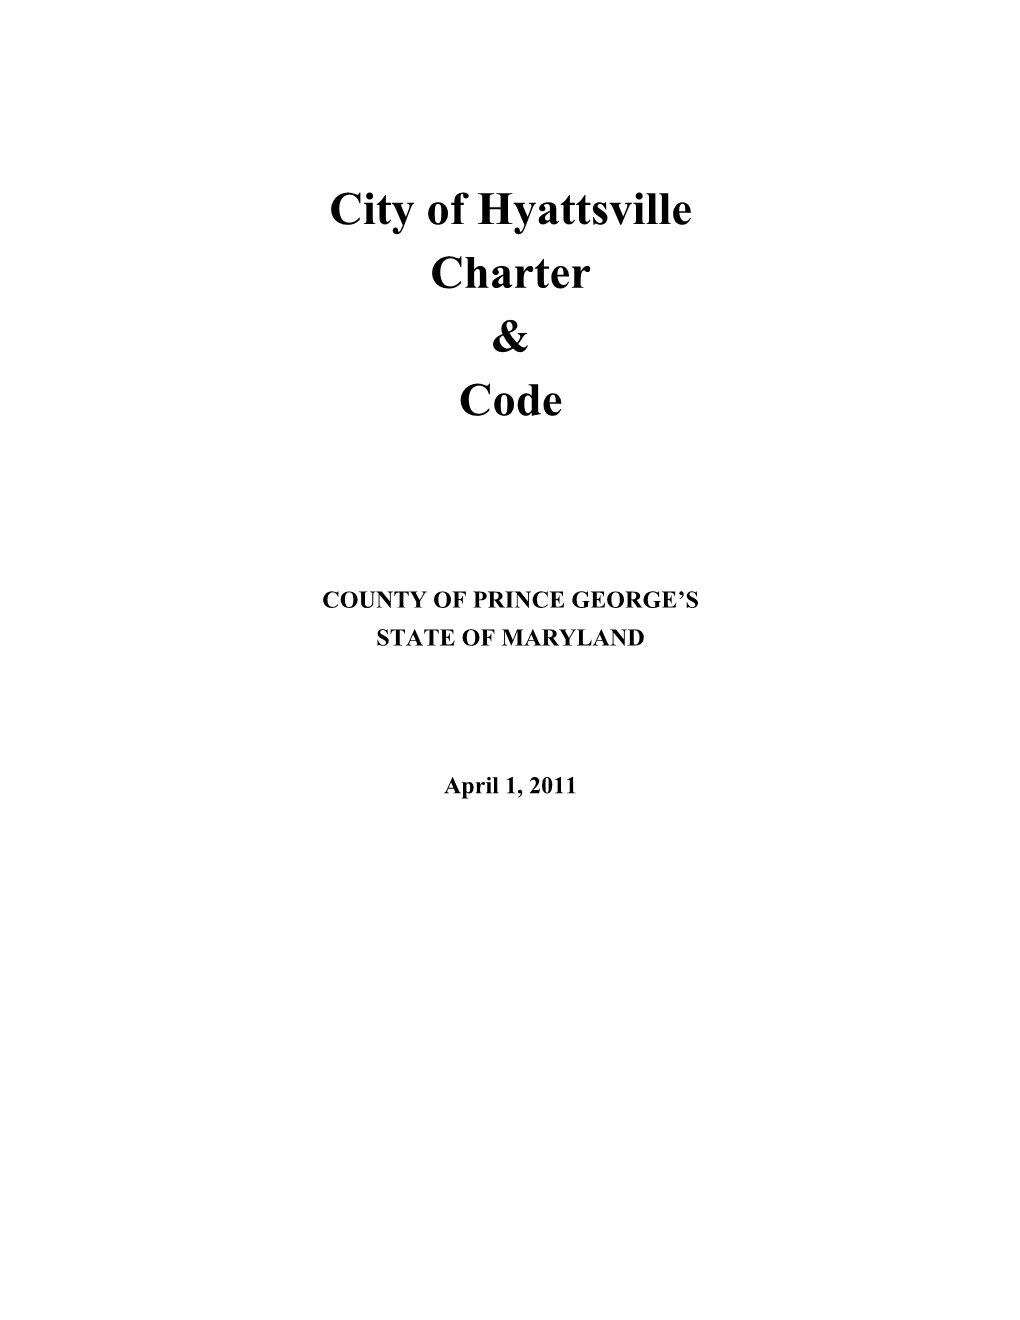 Hyattsville Charter and Code